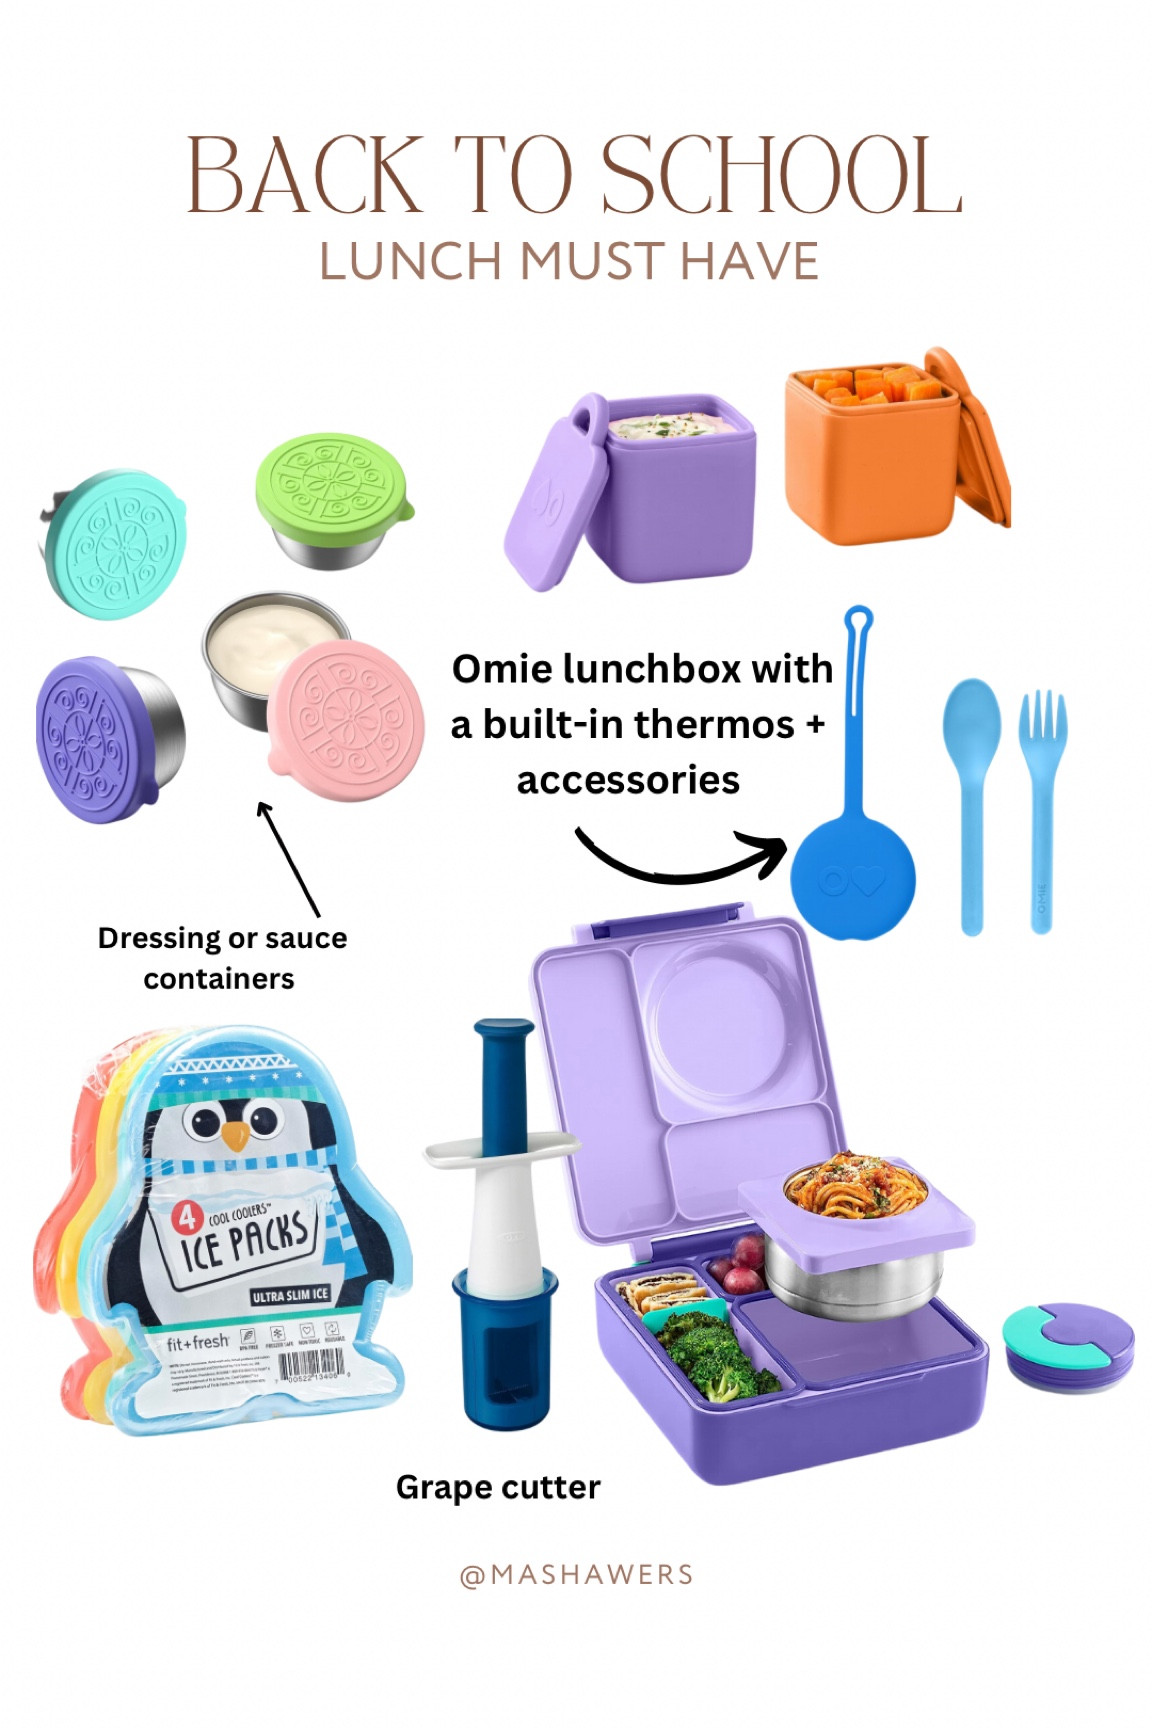 OXO Grape Cutter – Oh My Lunchbox